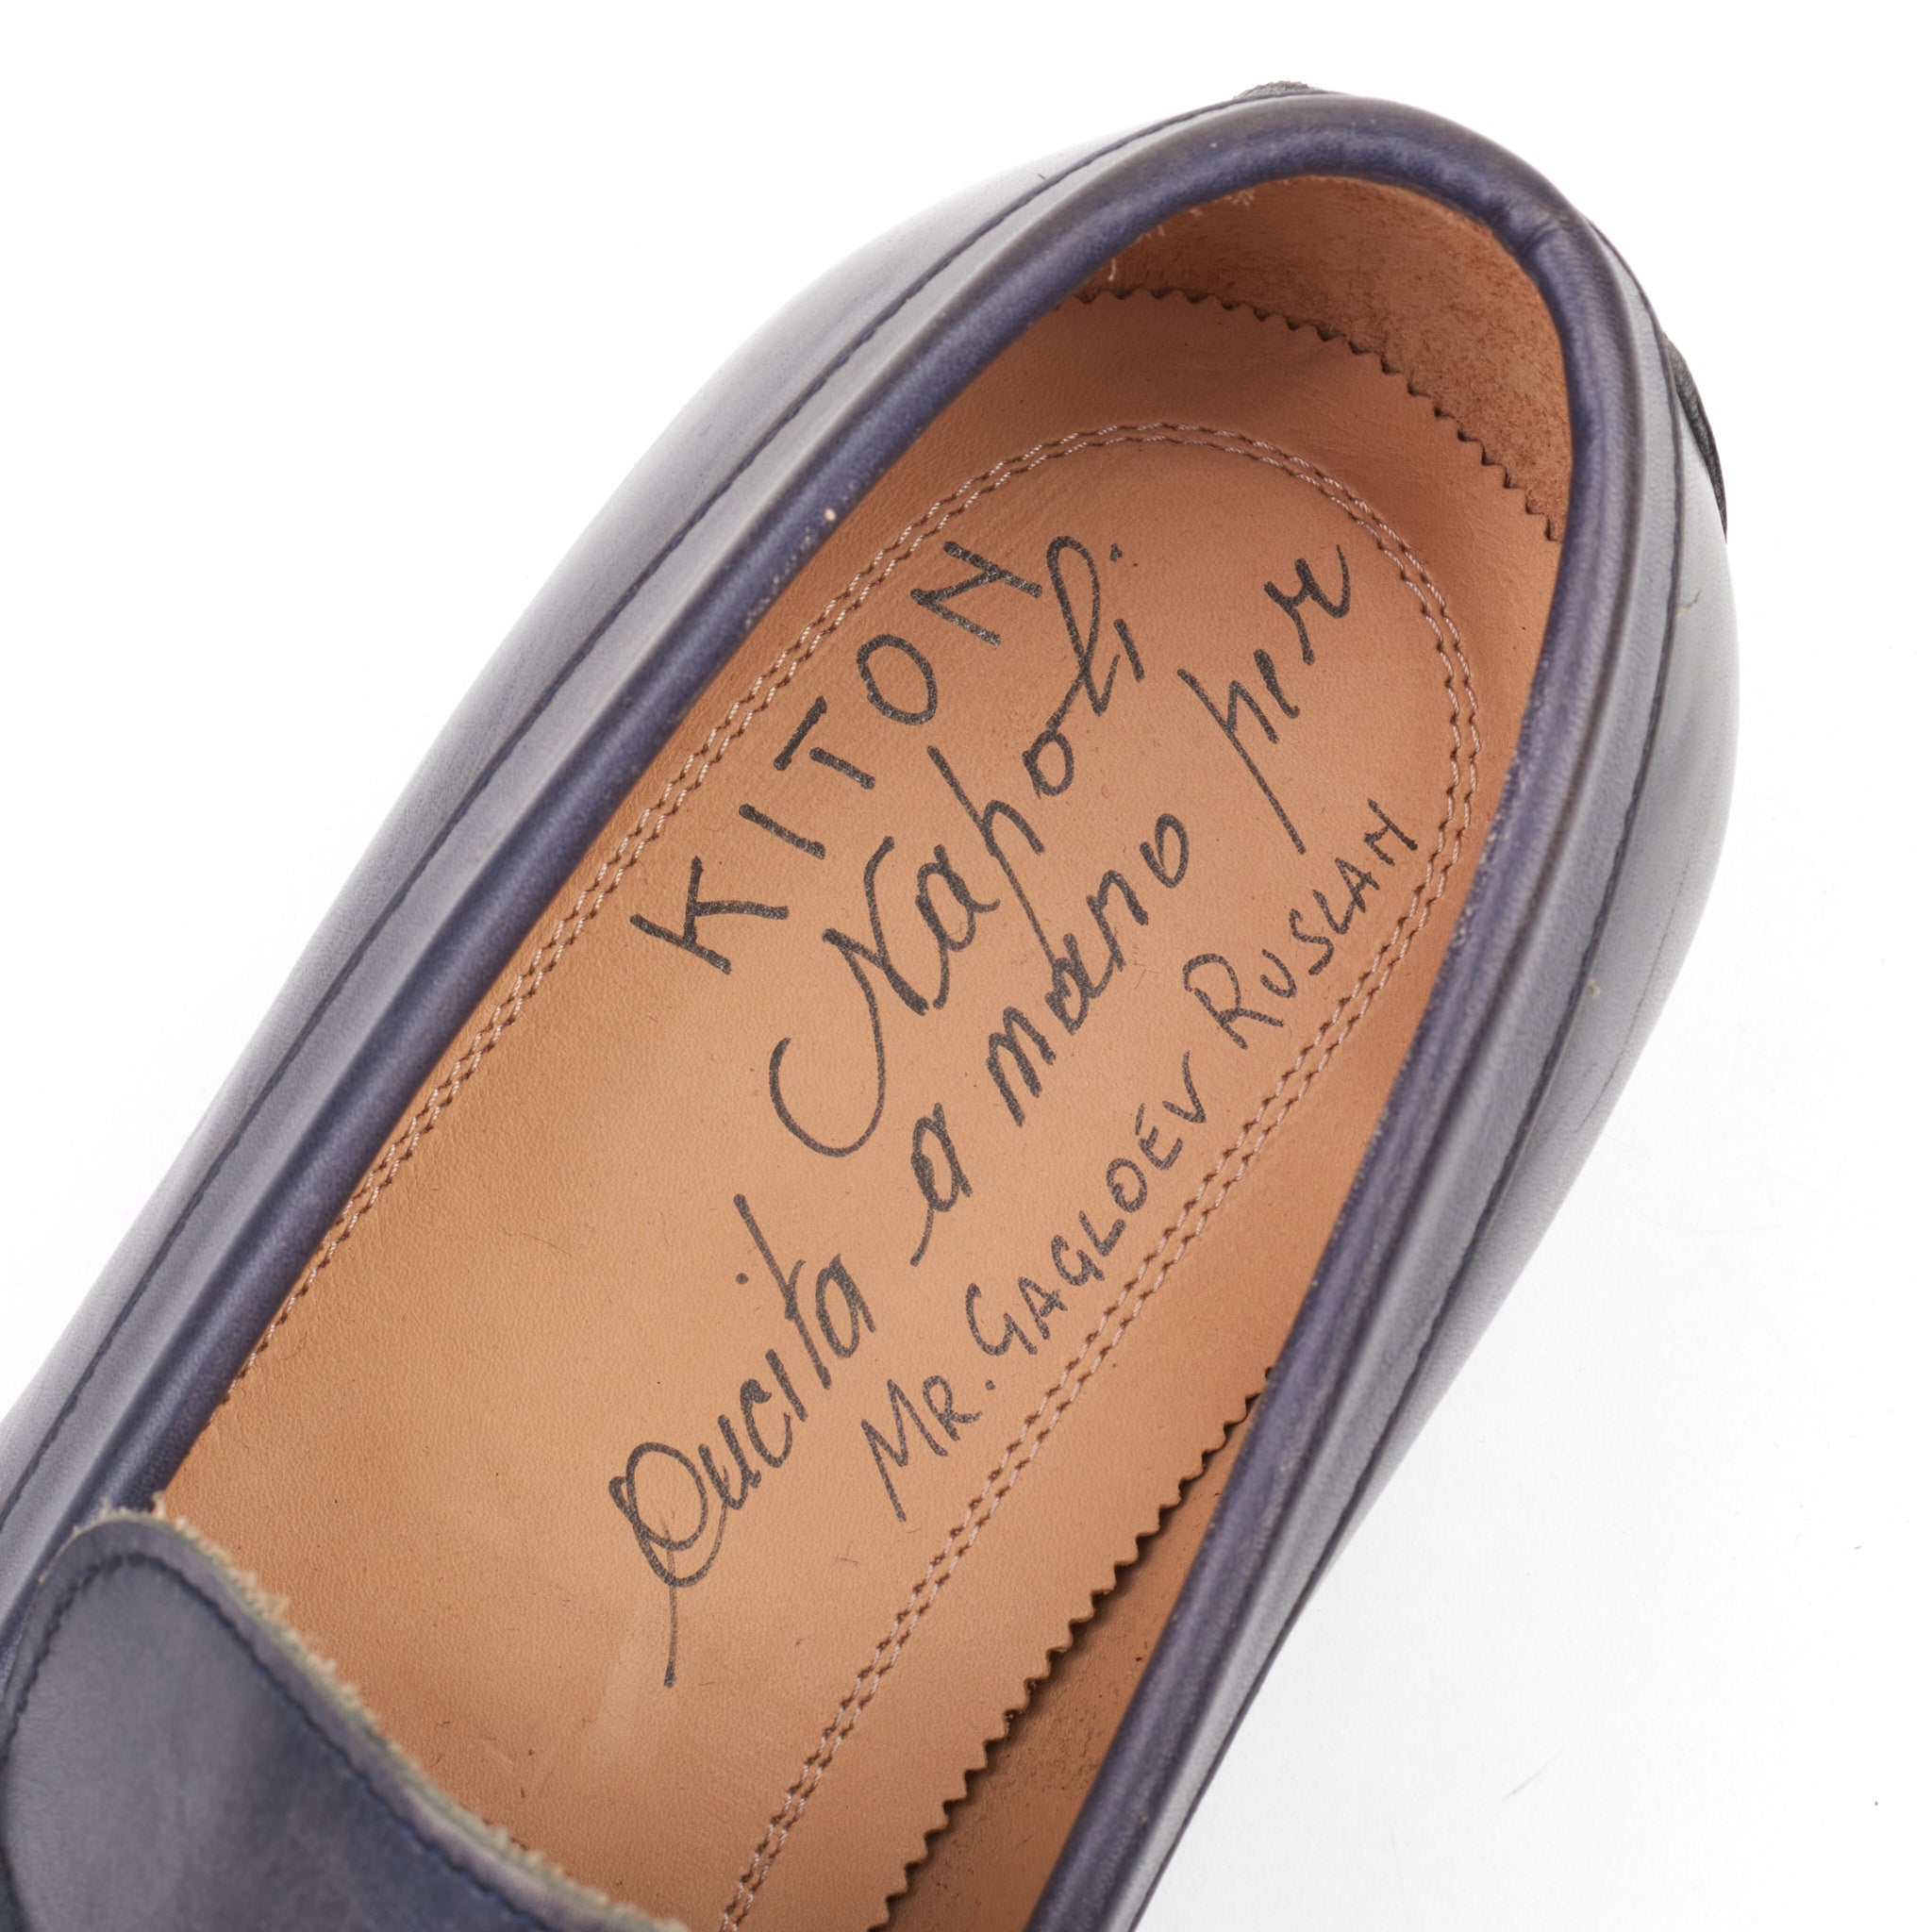 KITON Handmade Custom-Made Blue Leather Penny Loafer Shoes US 7 Masterpiece KITON